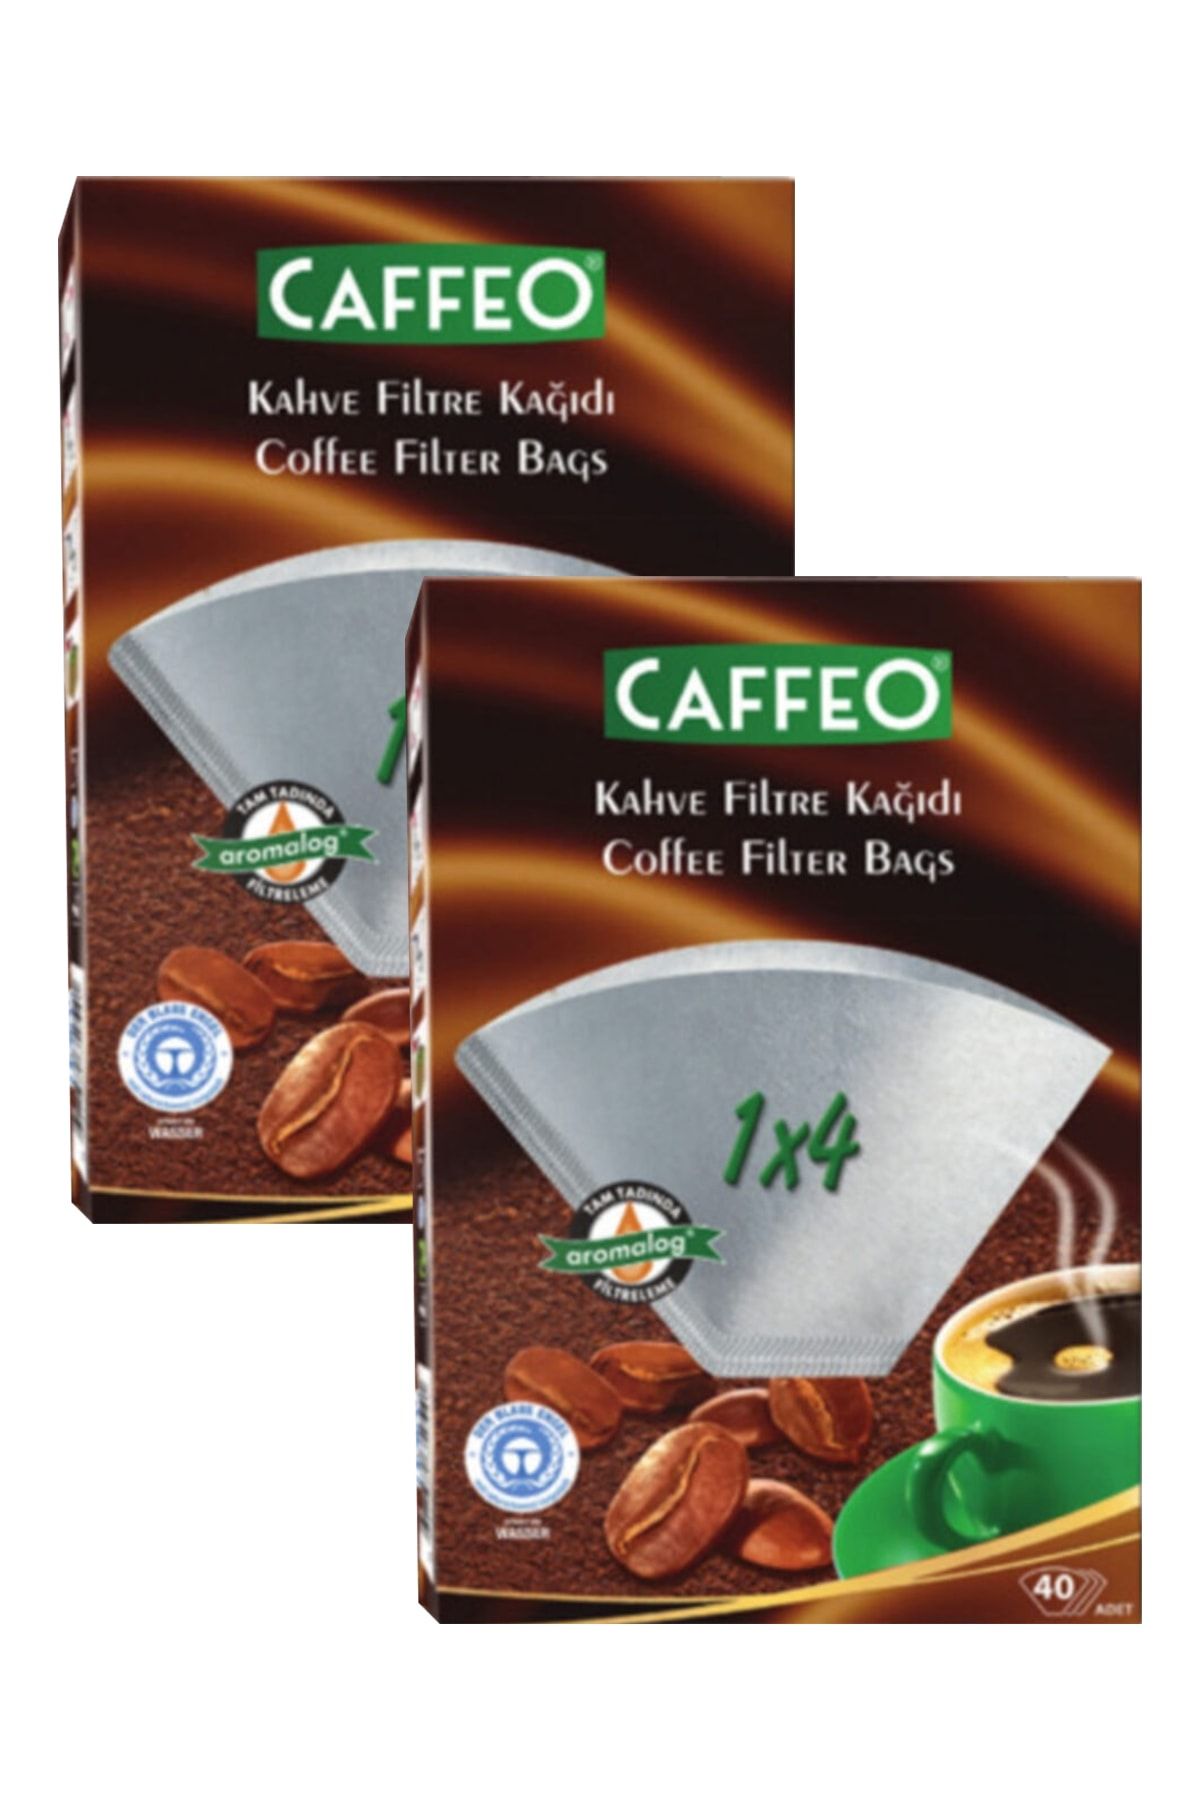 Caffeo Kahve Filtre Kağıdı 1x4 4 Numara 40'lı Paket  x 2 Adet